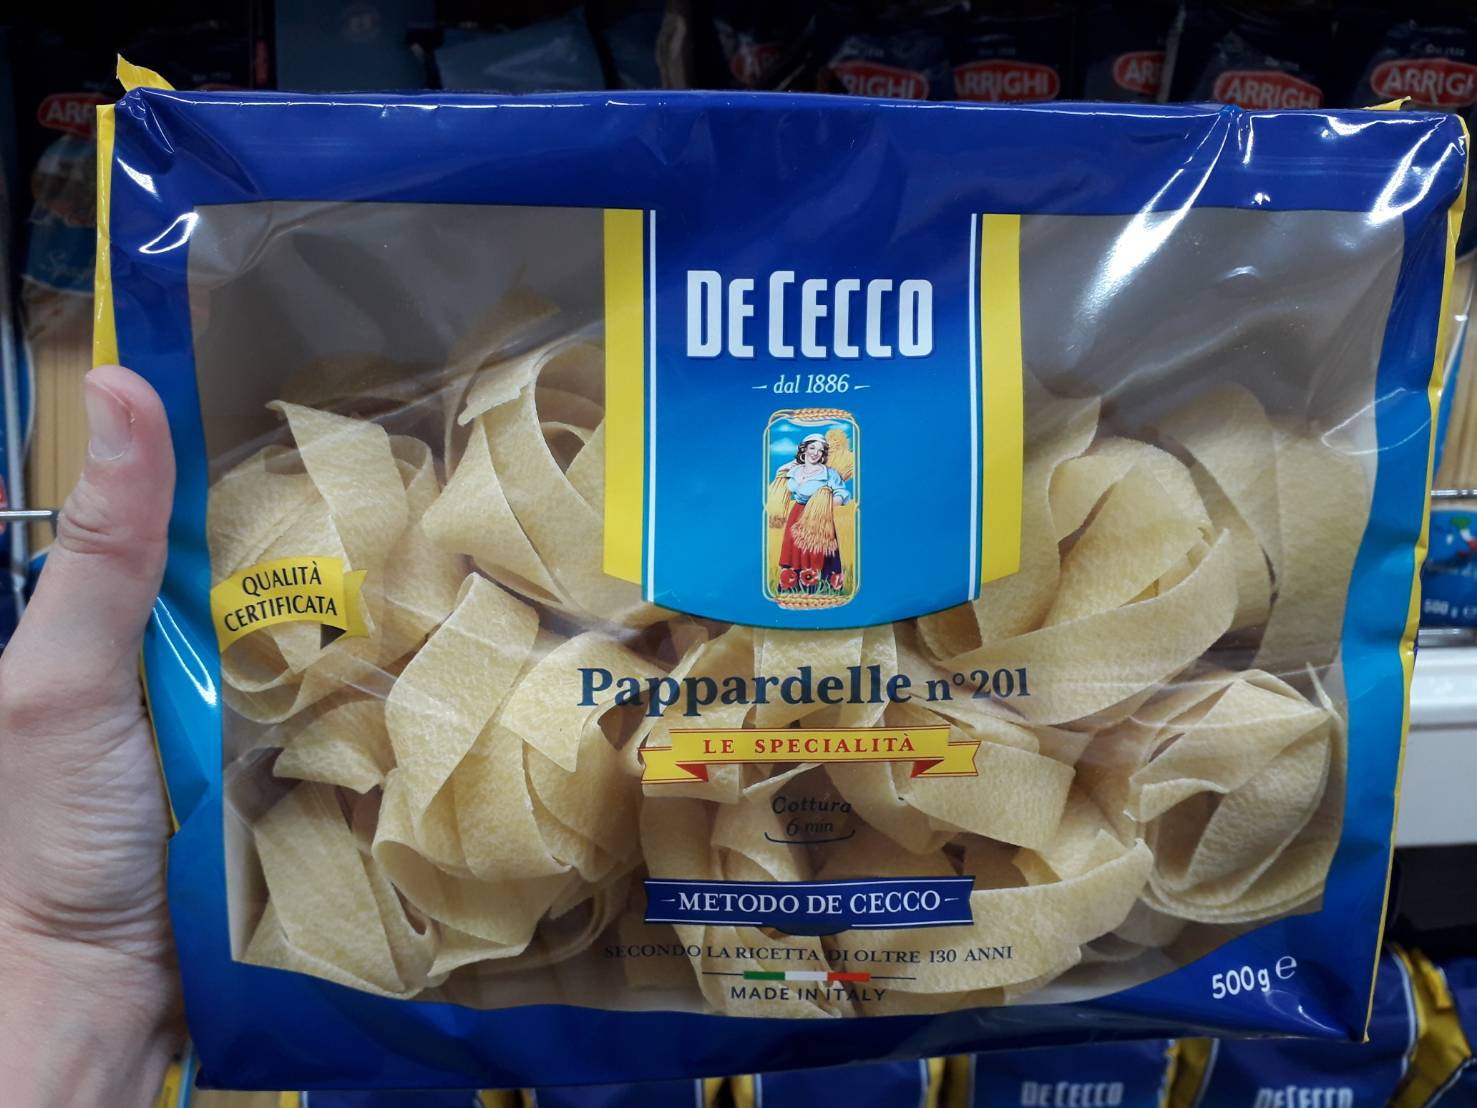 De Cecco Pasta Pappardelle nidl semola No.201 ดีเชคโก้ พาสต้า เส้นแบน เบอร์201 หนัก500g